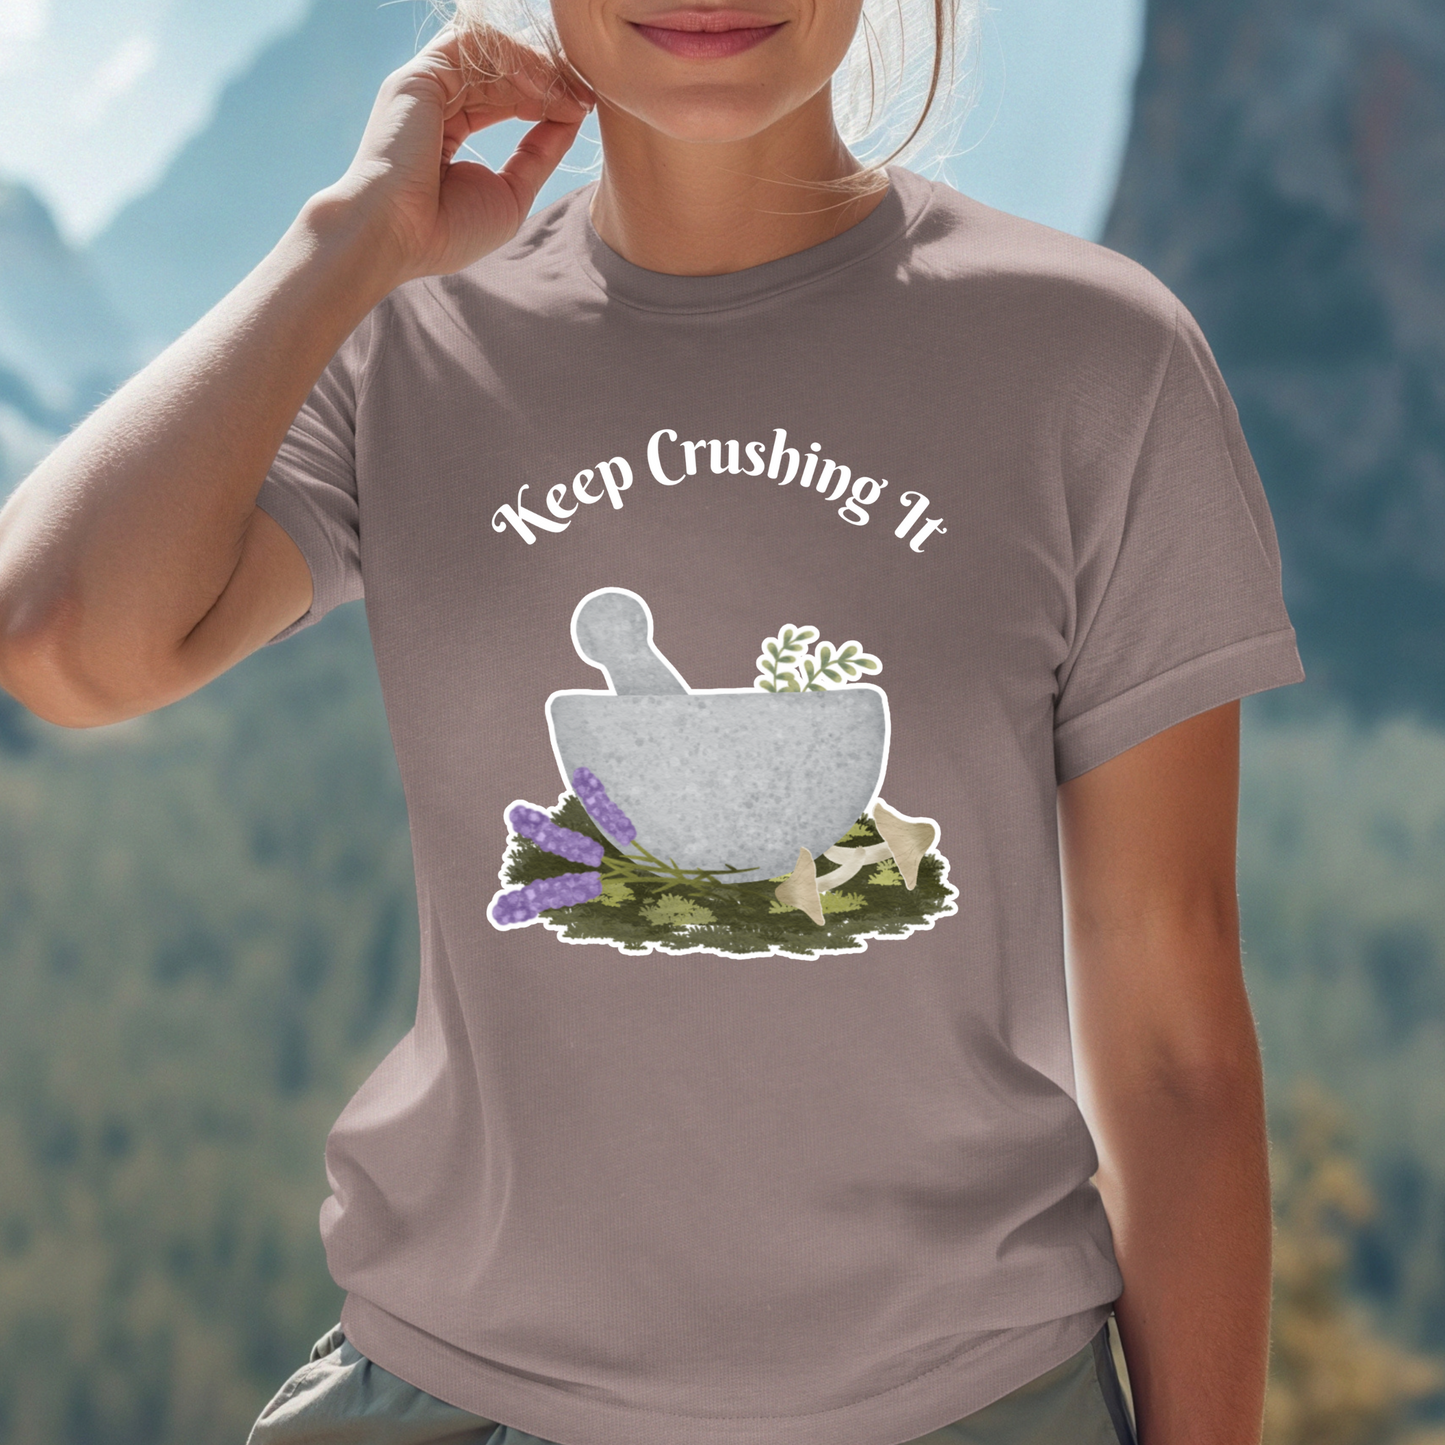 Keep Crushing It Graphic T Shirt